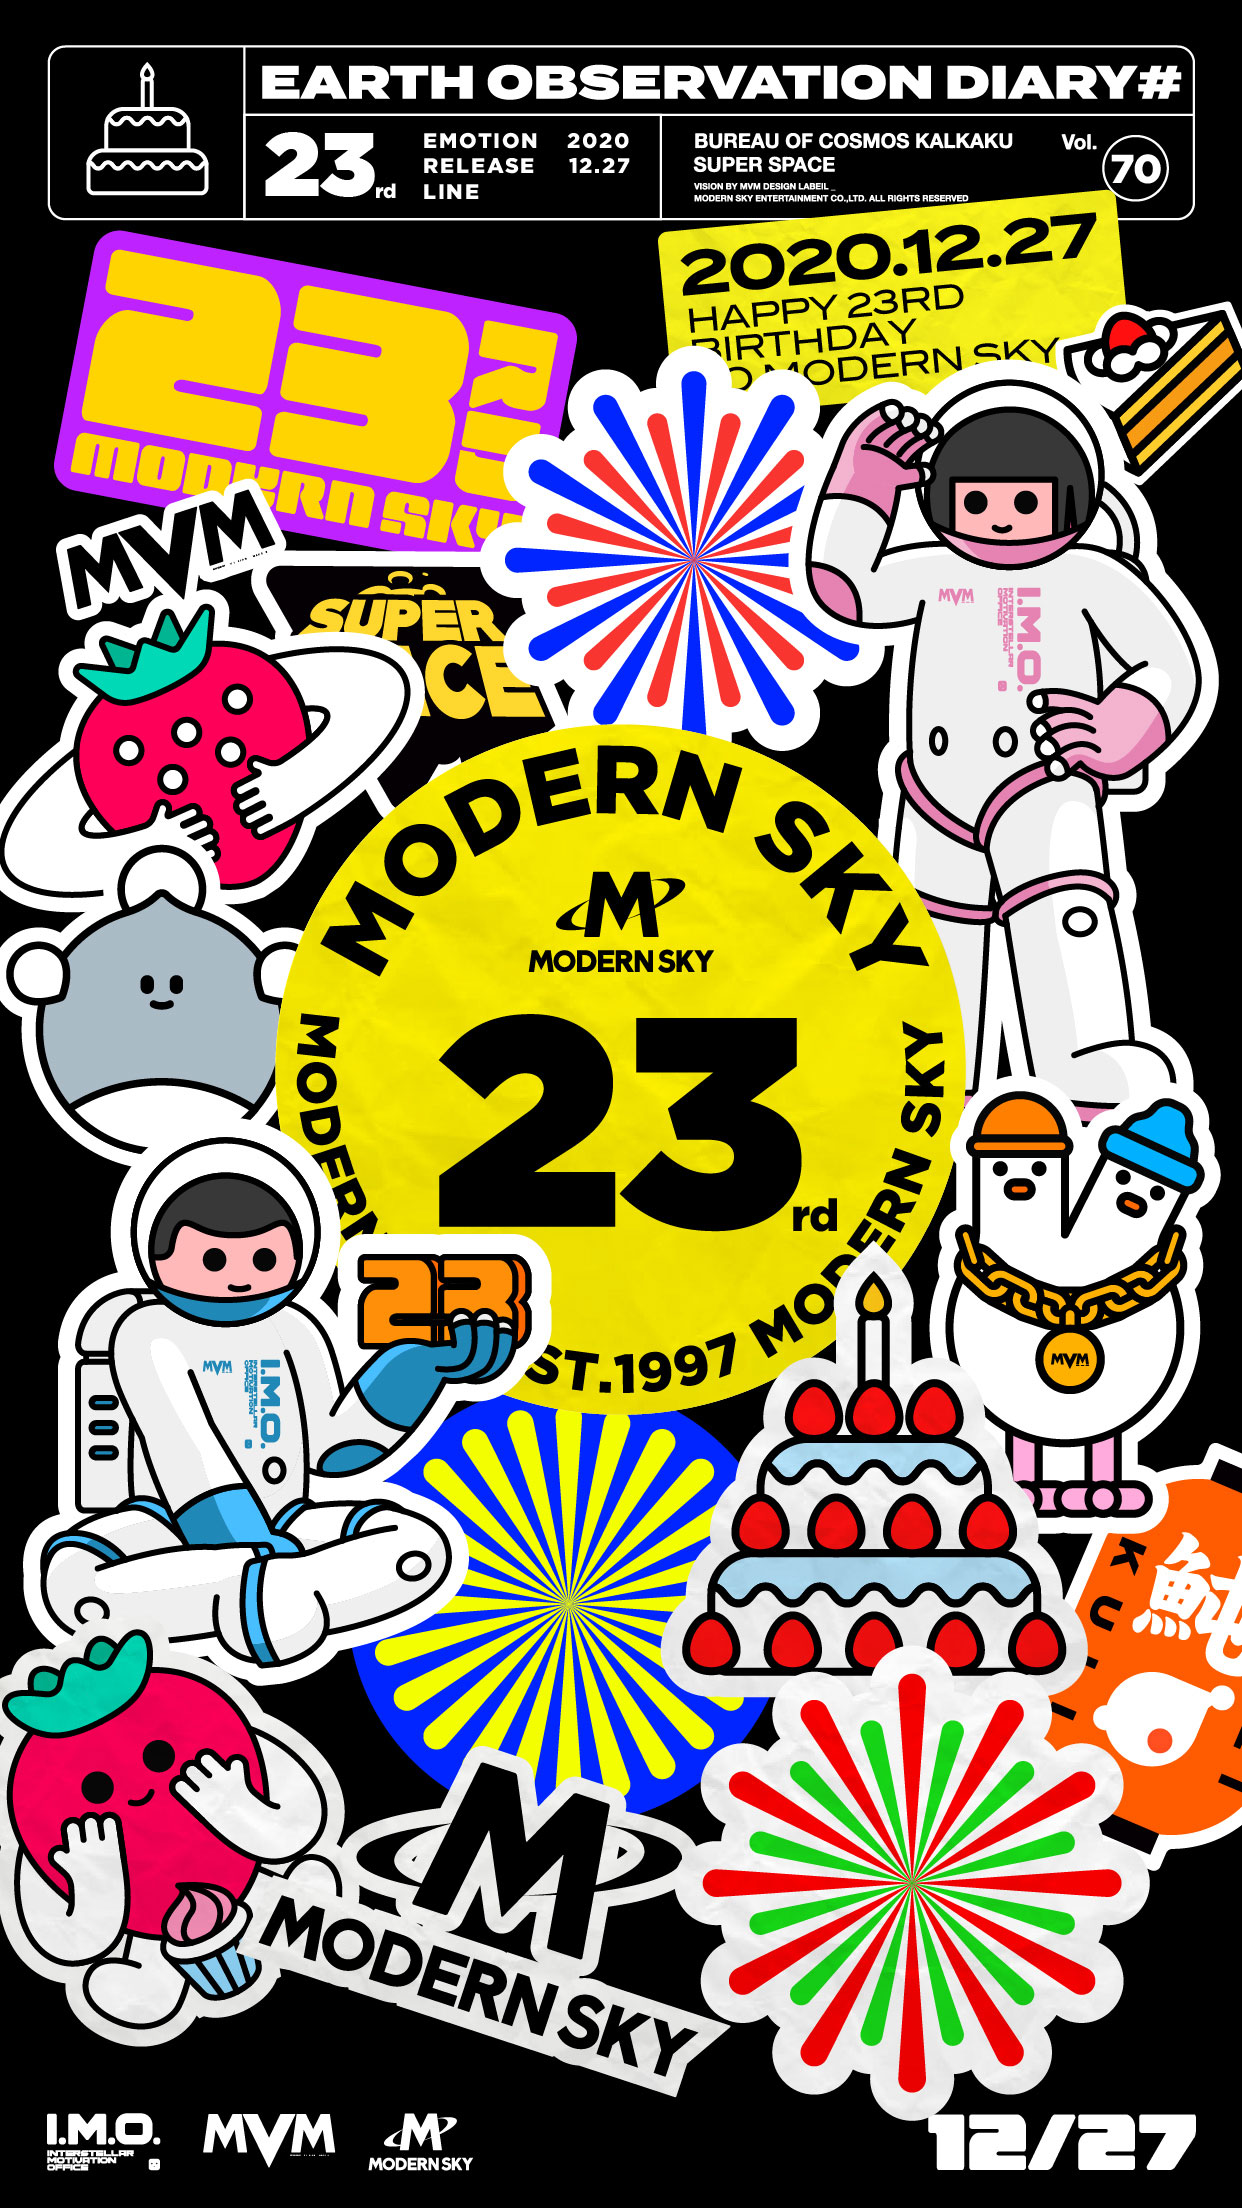 Happy 23rd birthday to MODERN SKY